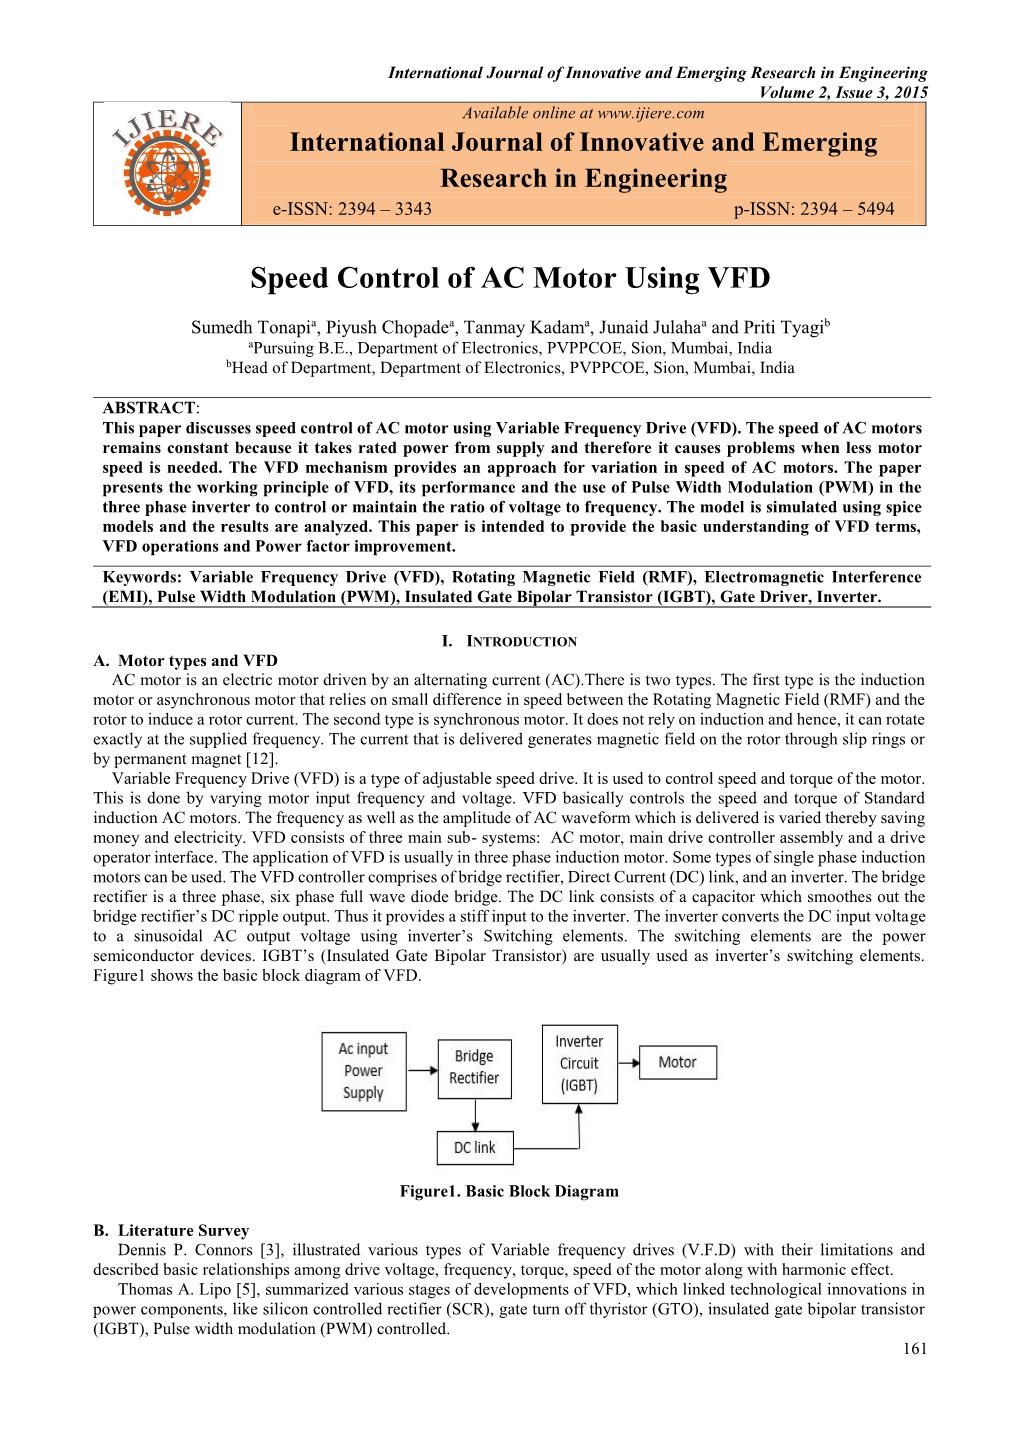 Speed Control of AC Motor Using VFD